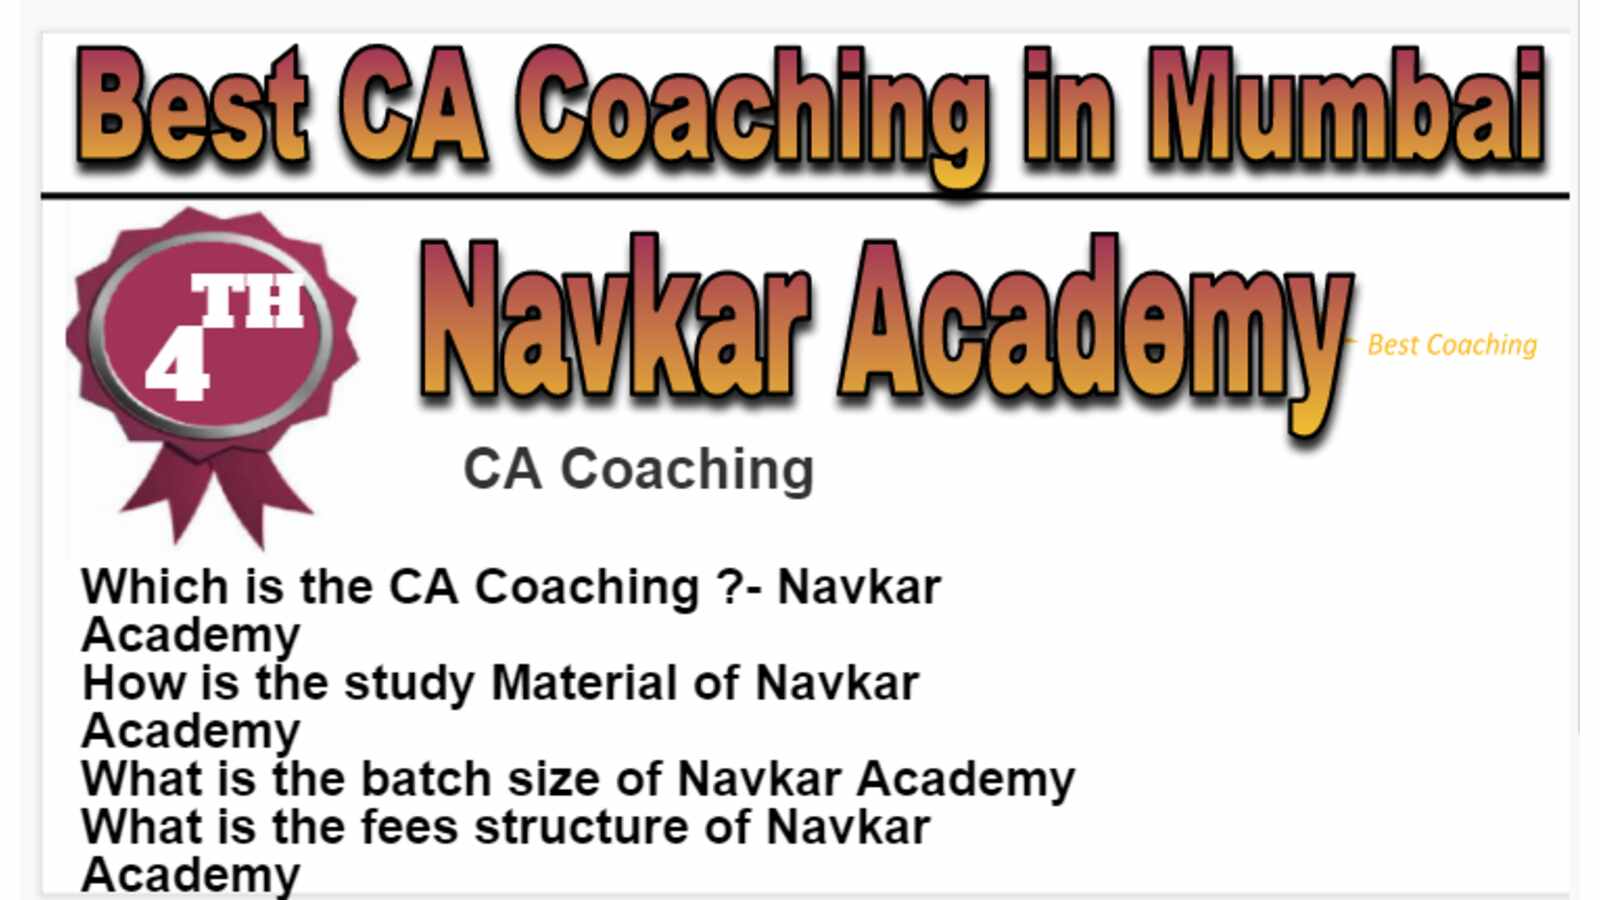 Rank 4 Best CA Coaching in Mumbai